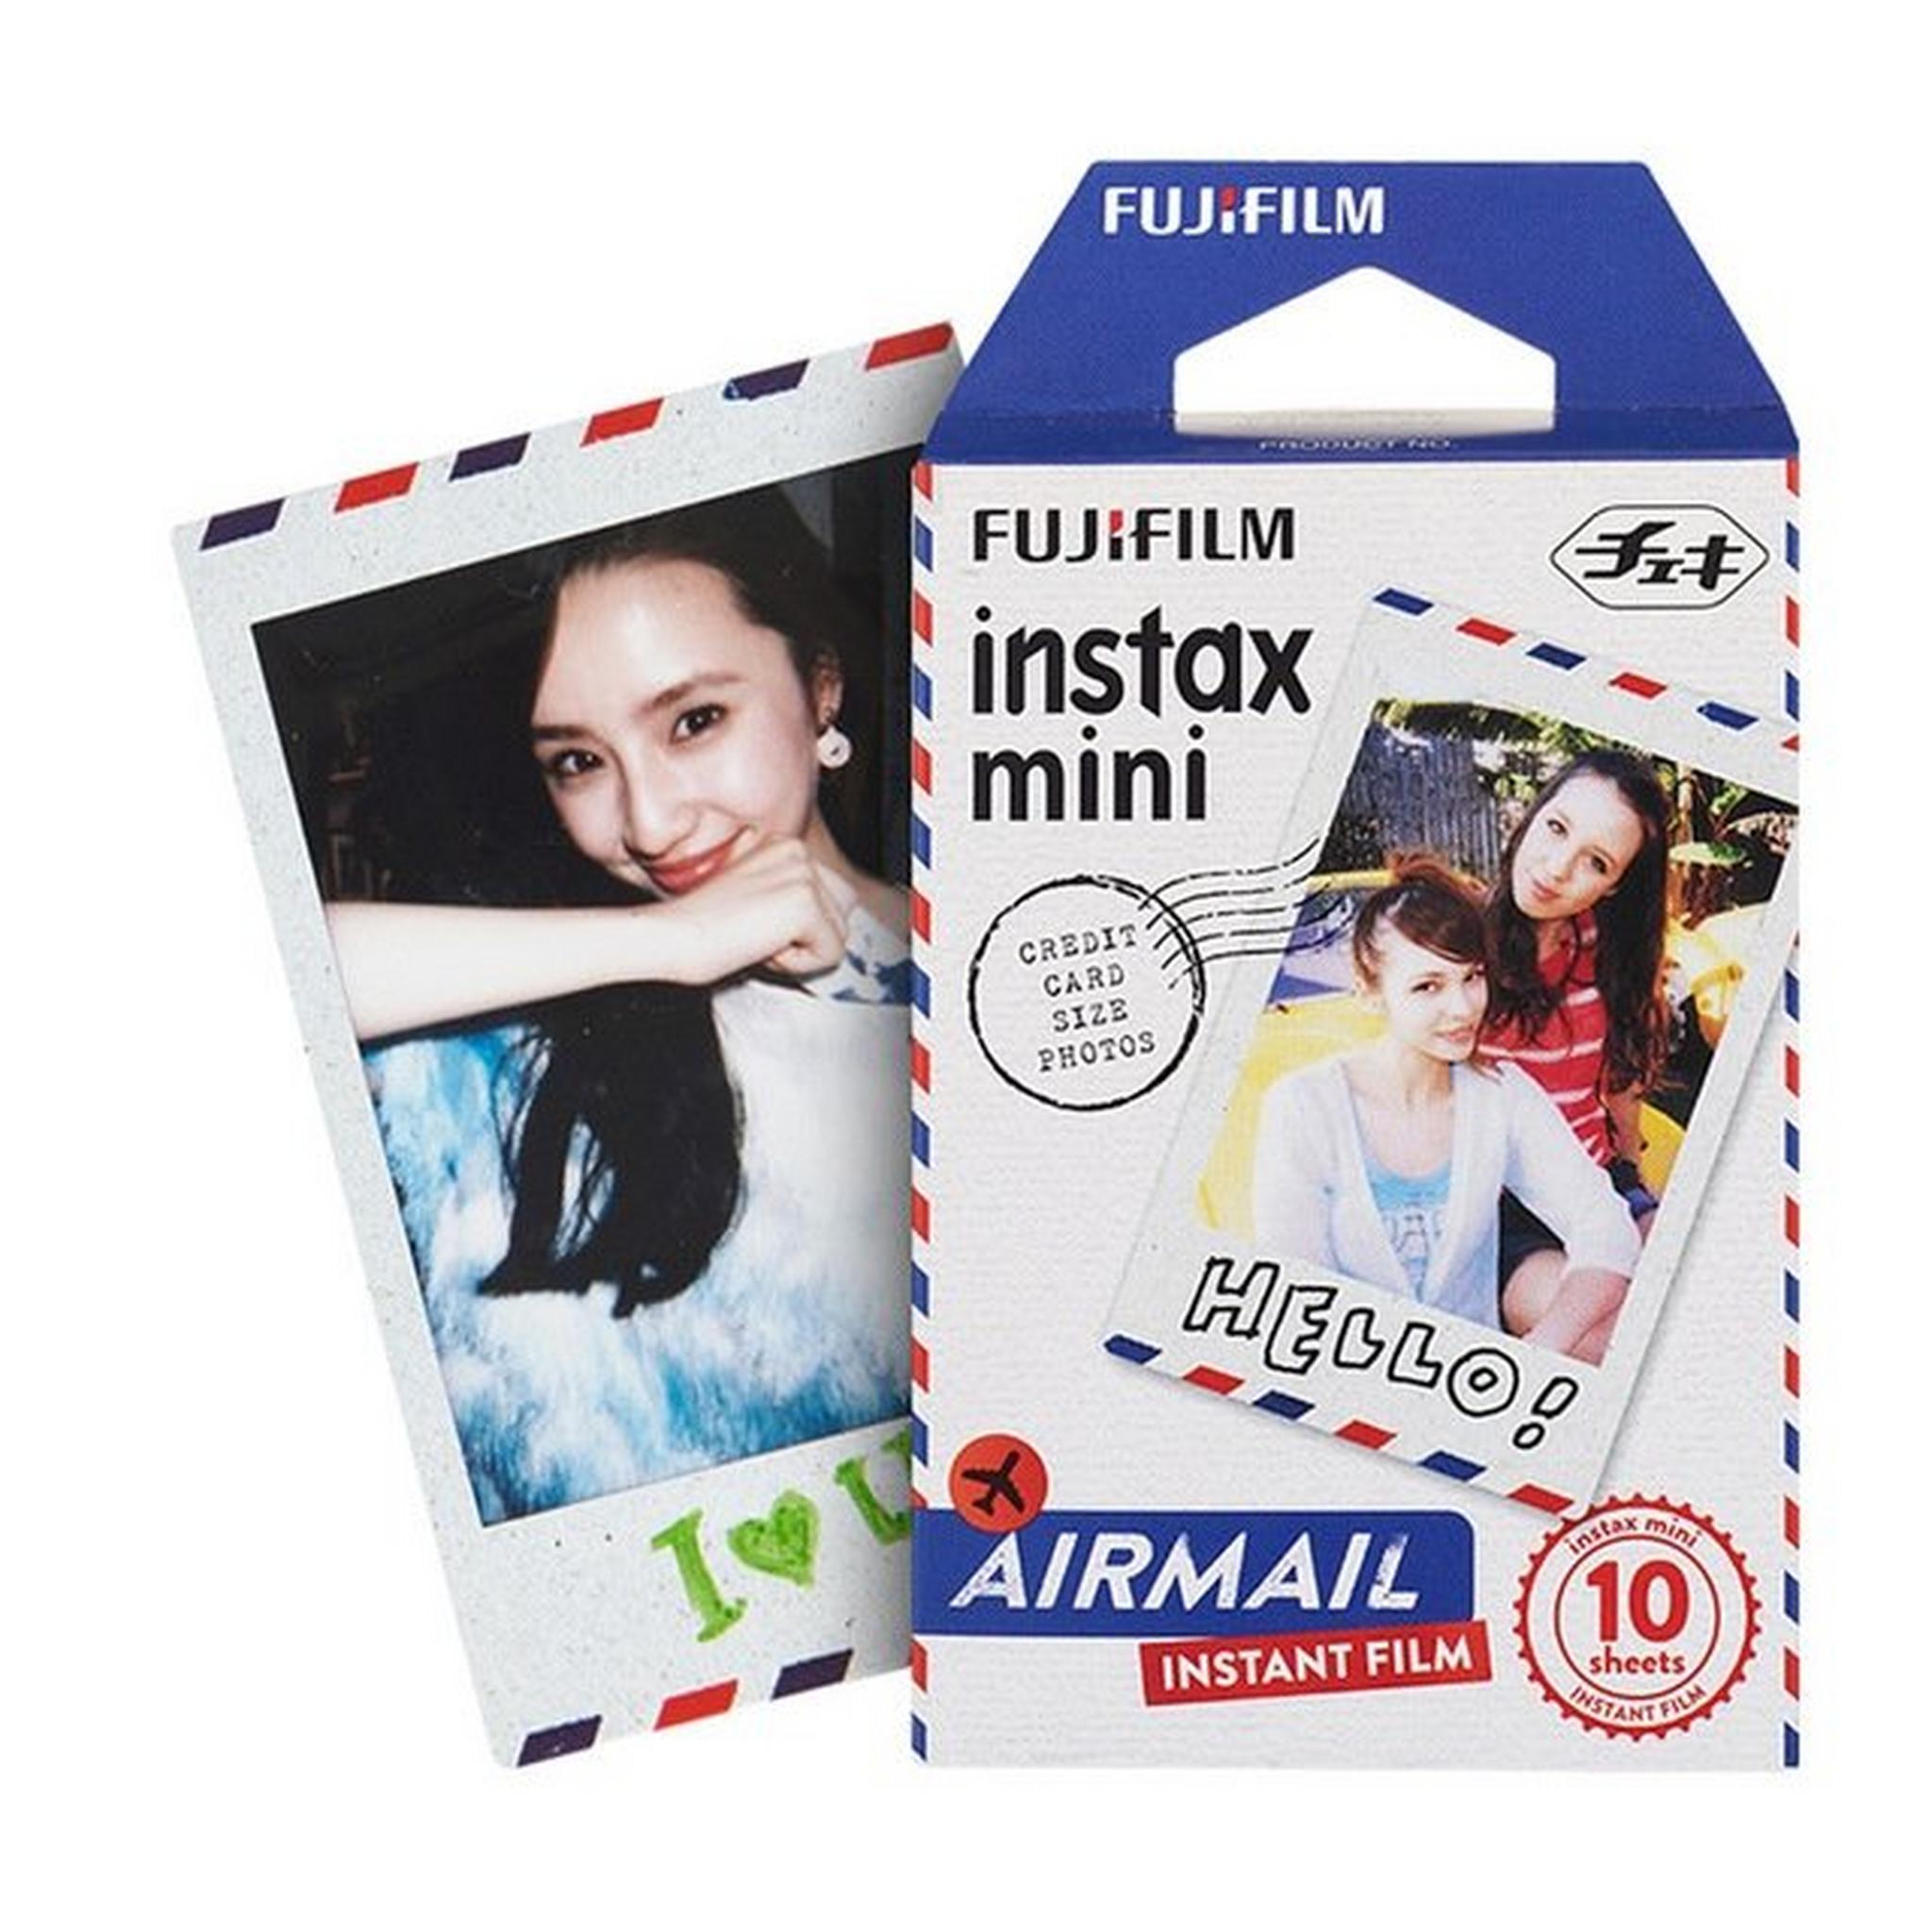 Fujifilm Instax Mini Air Mail Film – 10 Sheets Per Pack